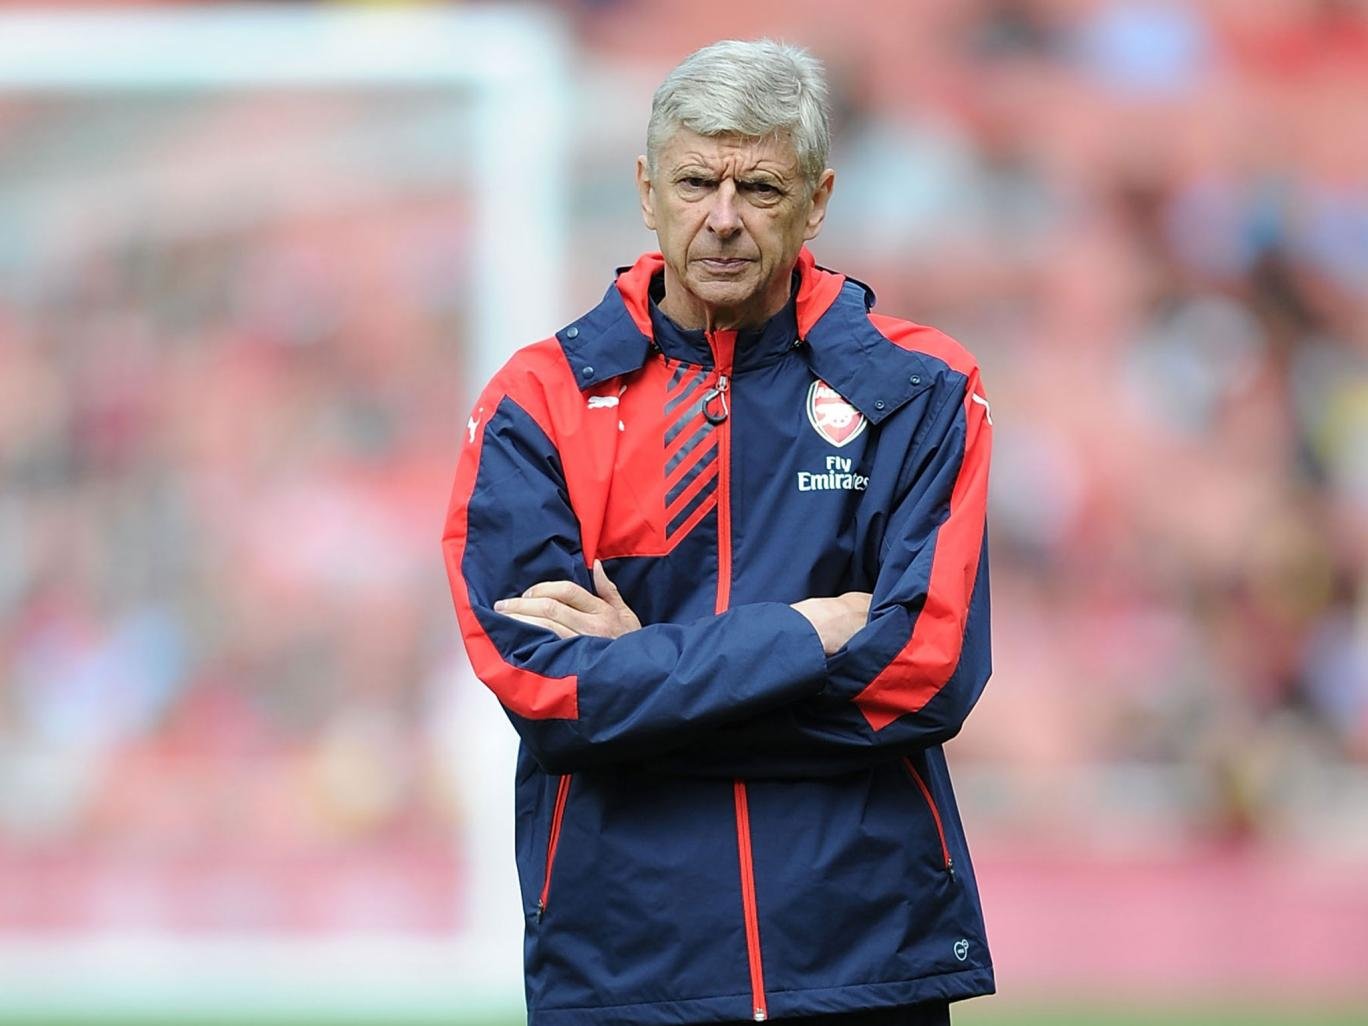 Wenger destacou que seus jogadores têm que manter a disciplina (Foto: Getty Images)